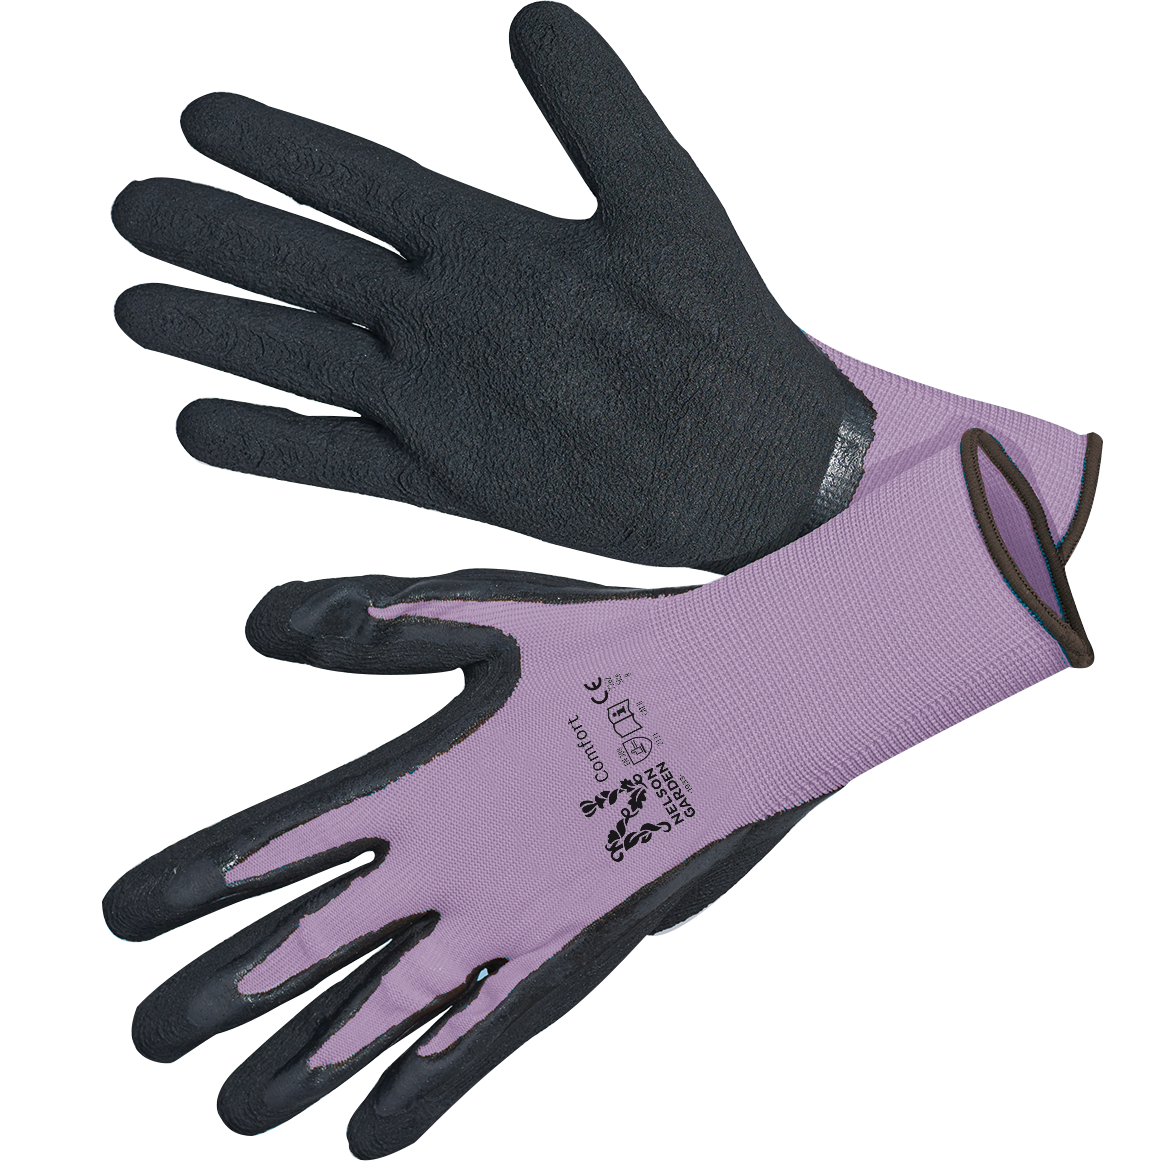 handske-comfort-violett-svart-stl-7-1